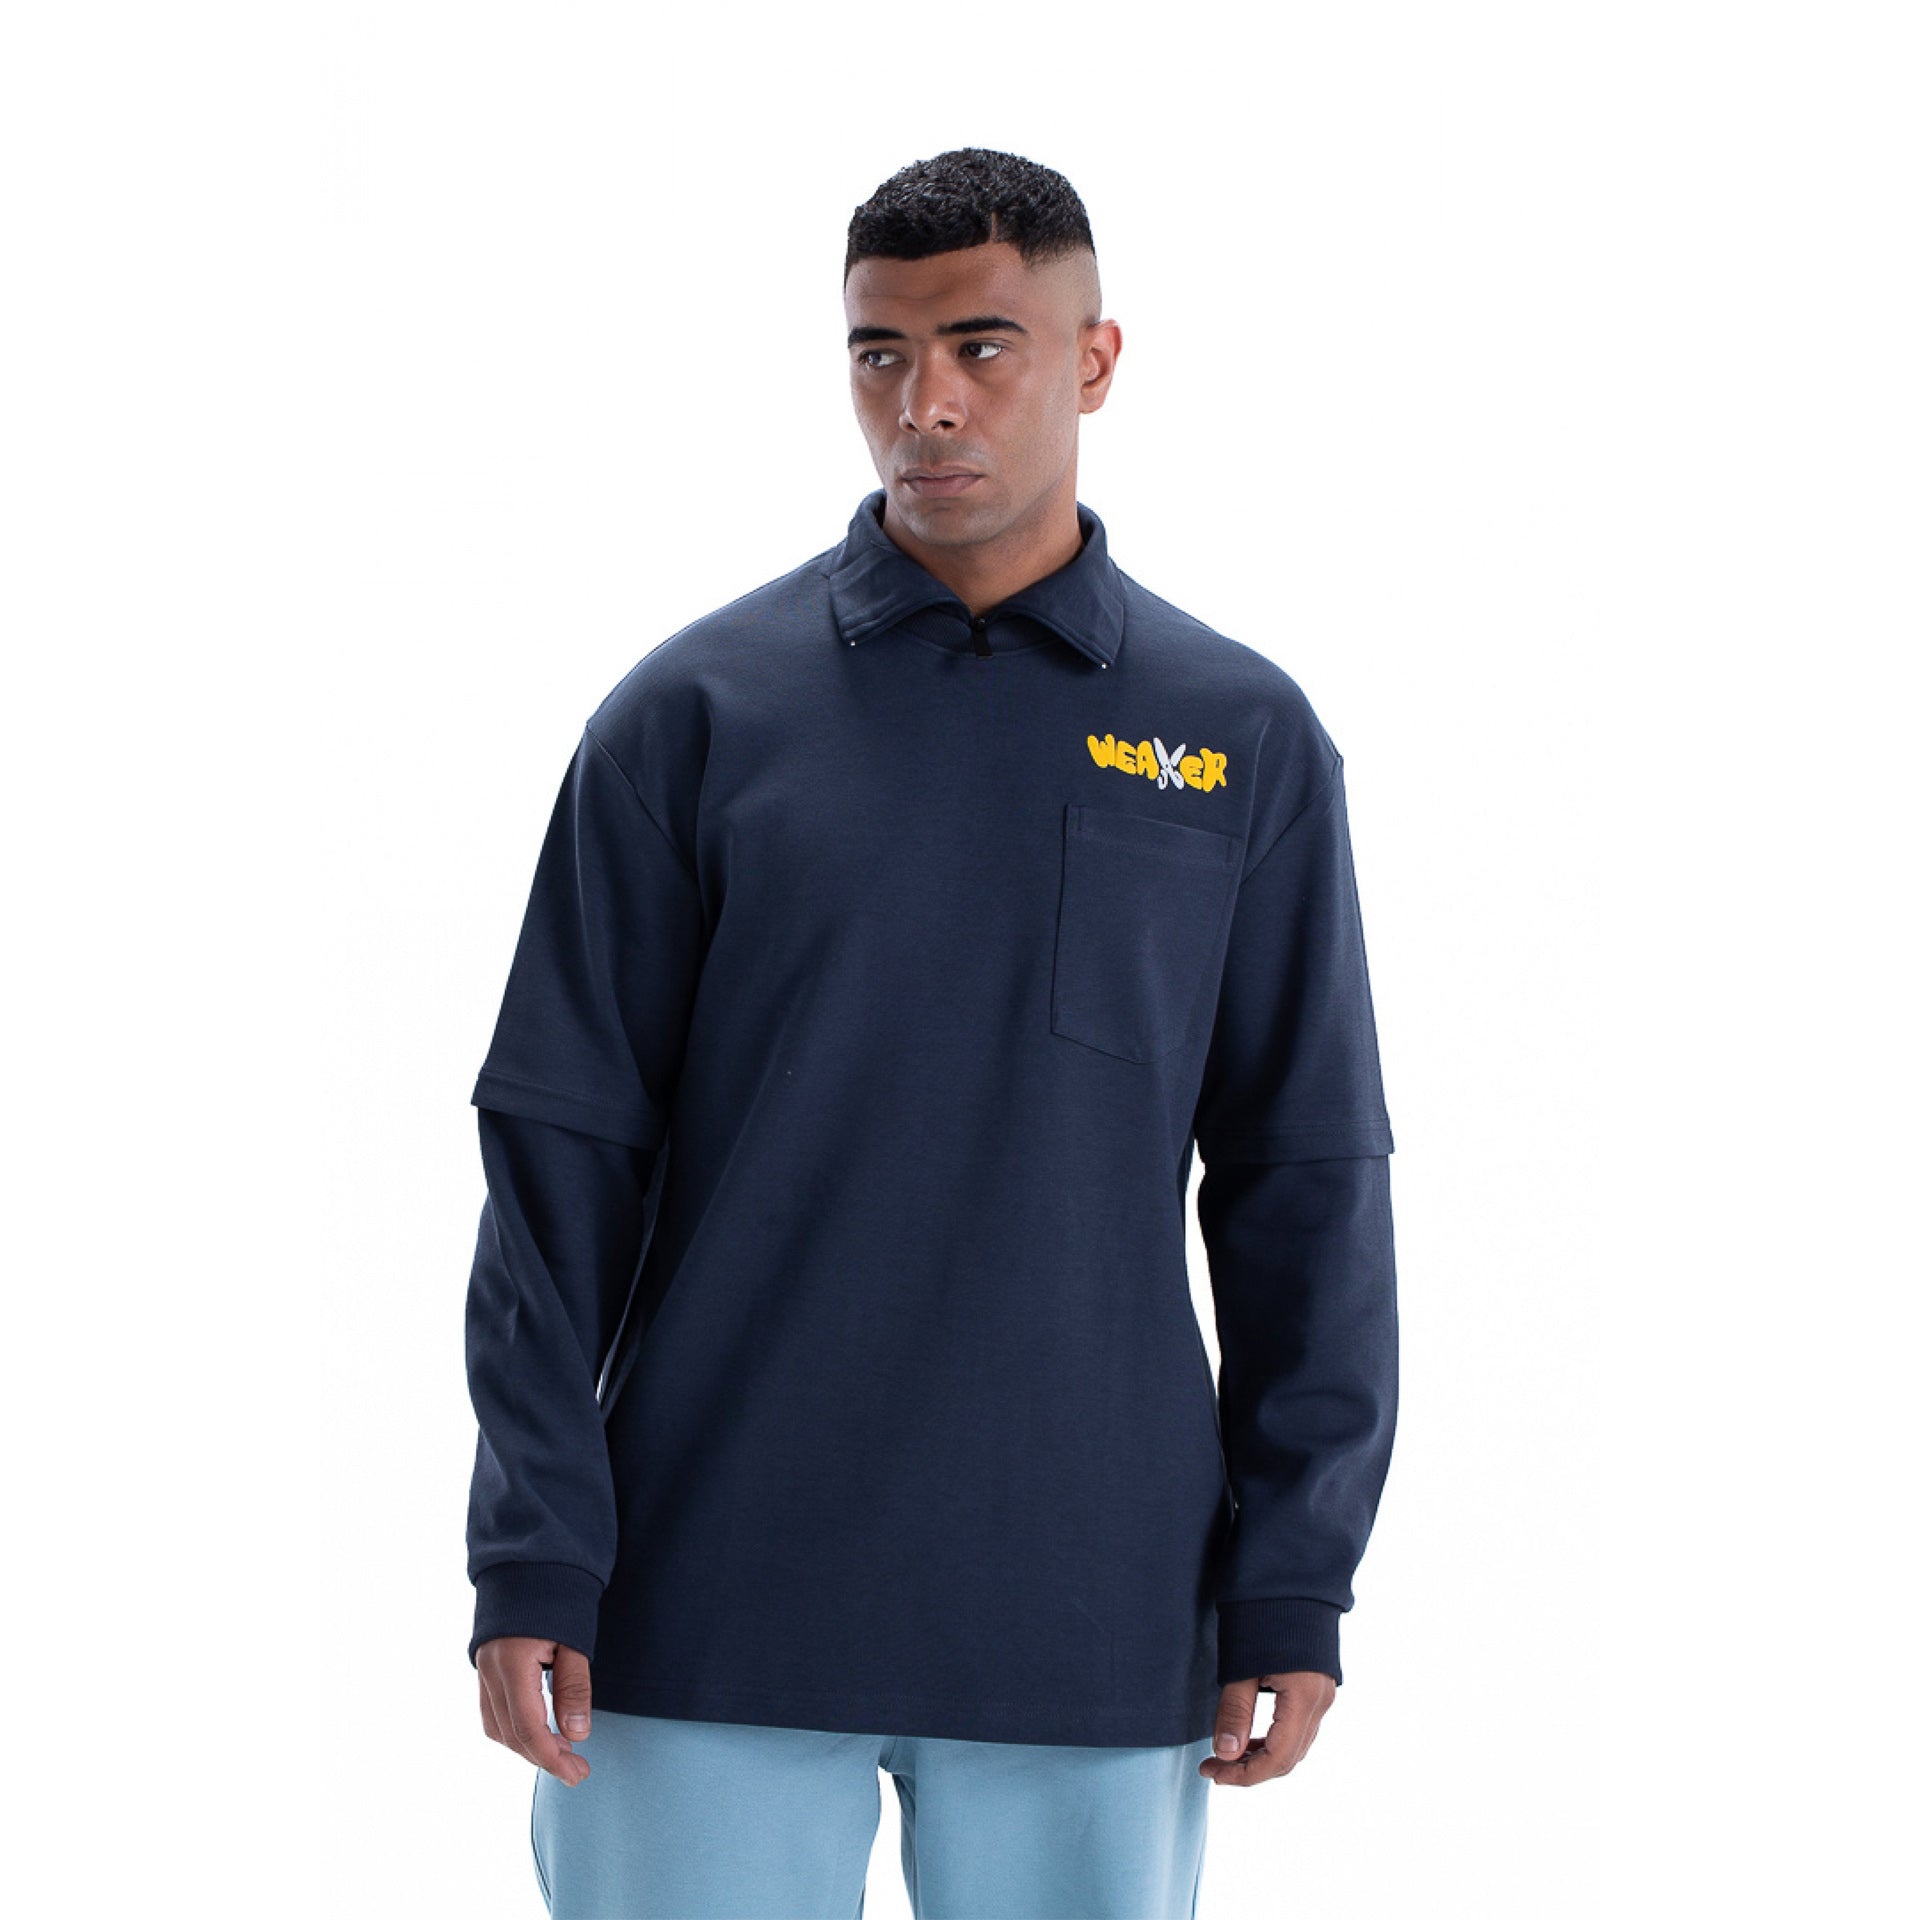 Navy Blue Sweatshirt By Weaver Design